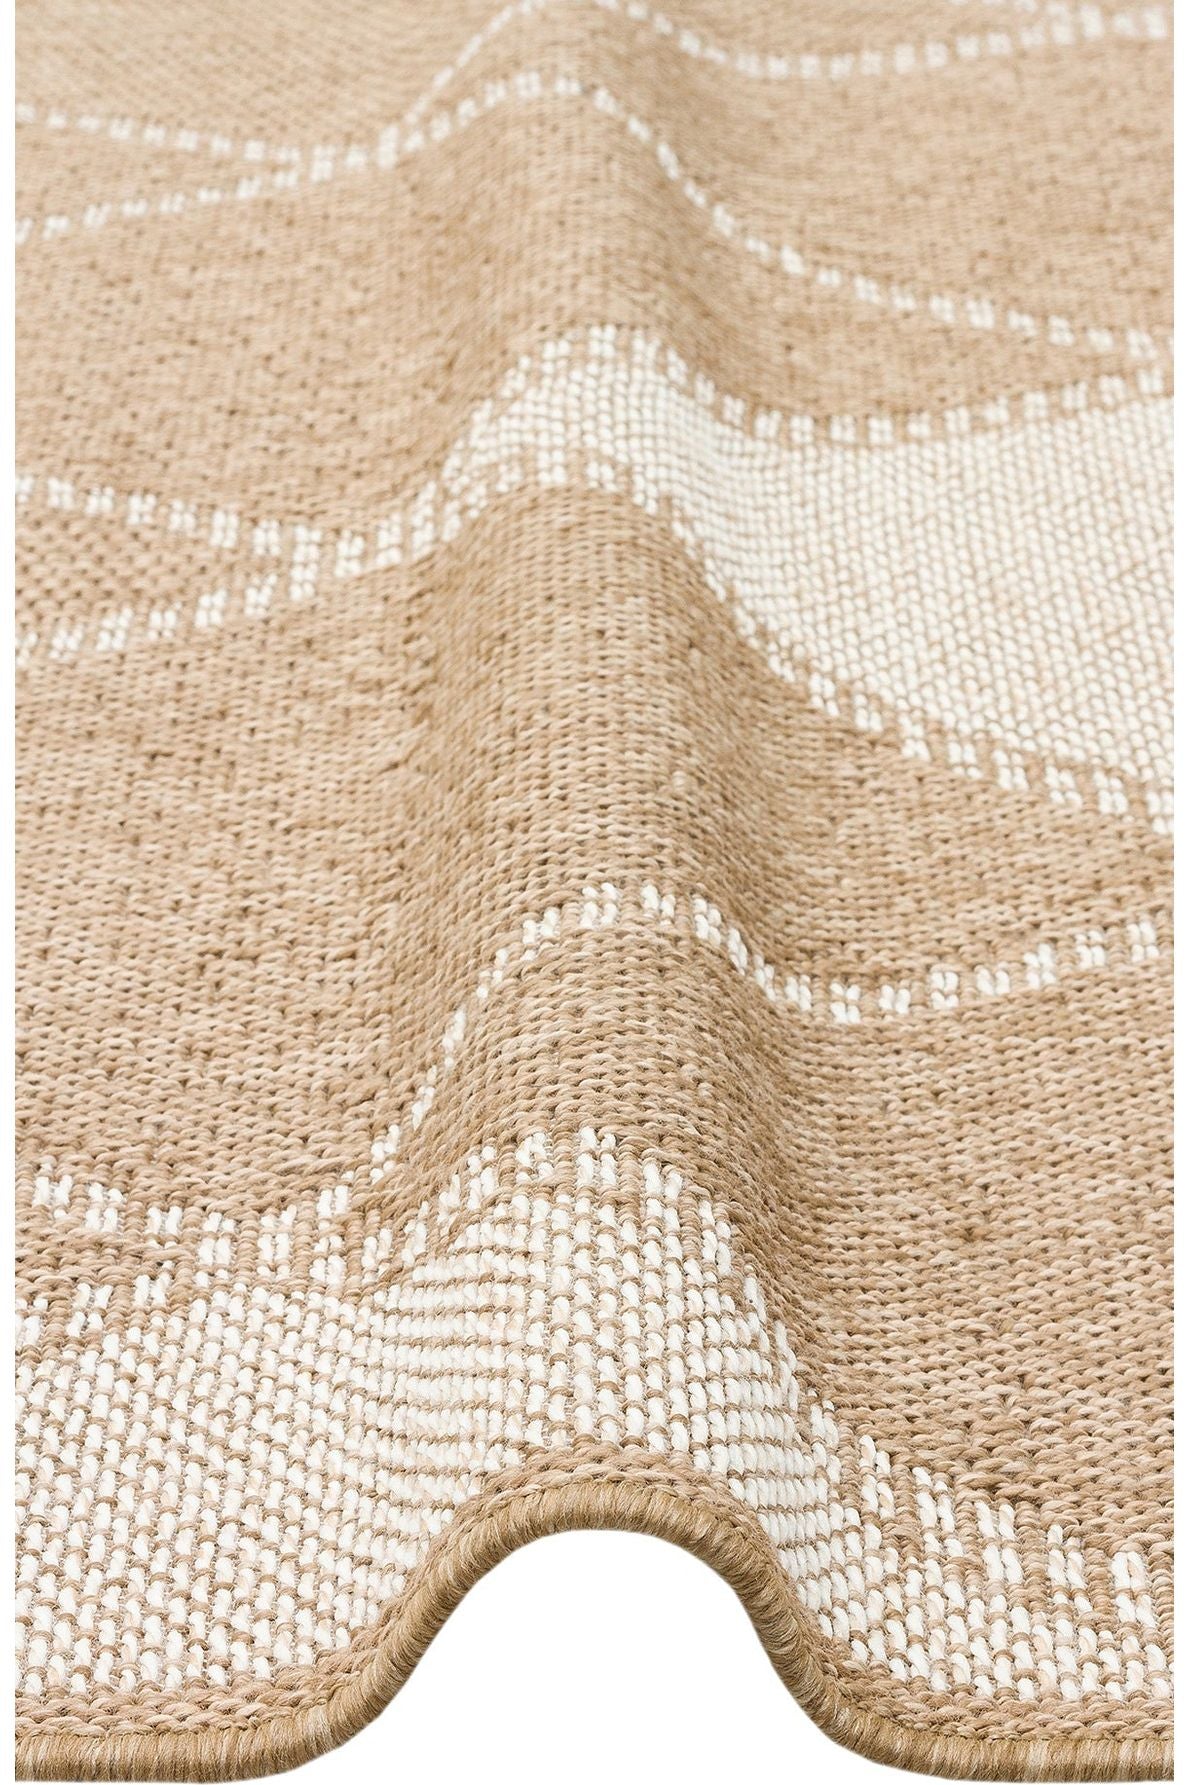 #Turkish_Carpets_Rugs# #Modern_Carpets# #Abrash_Carpets#Jute Styled Designed Indoor-Outdoor Sisal Kilim With Soft TextureSld 04 Natural White